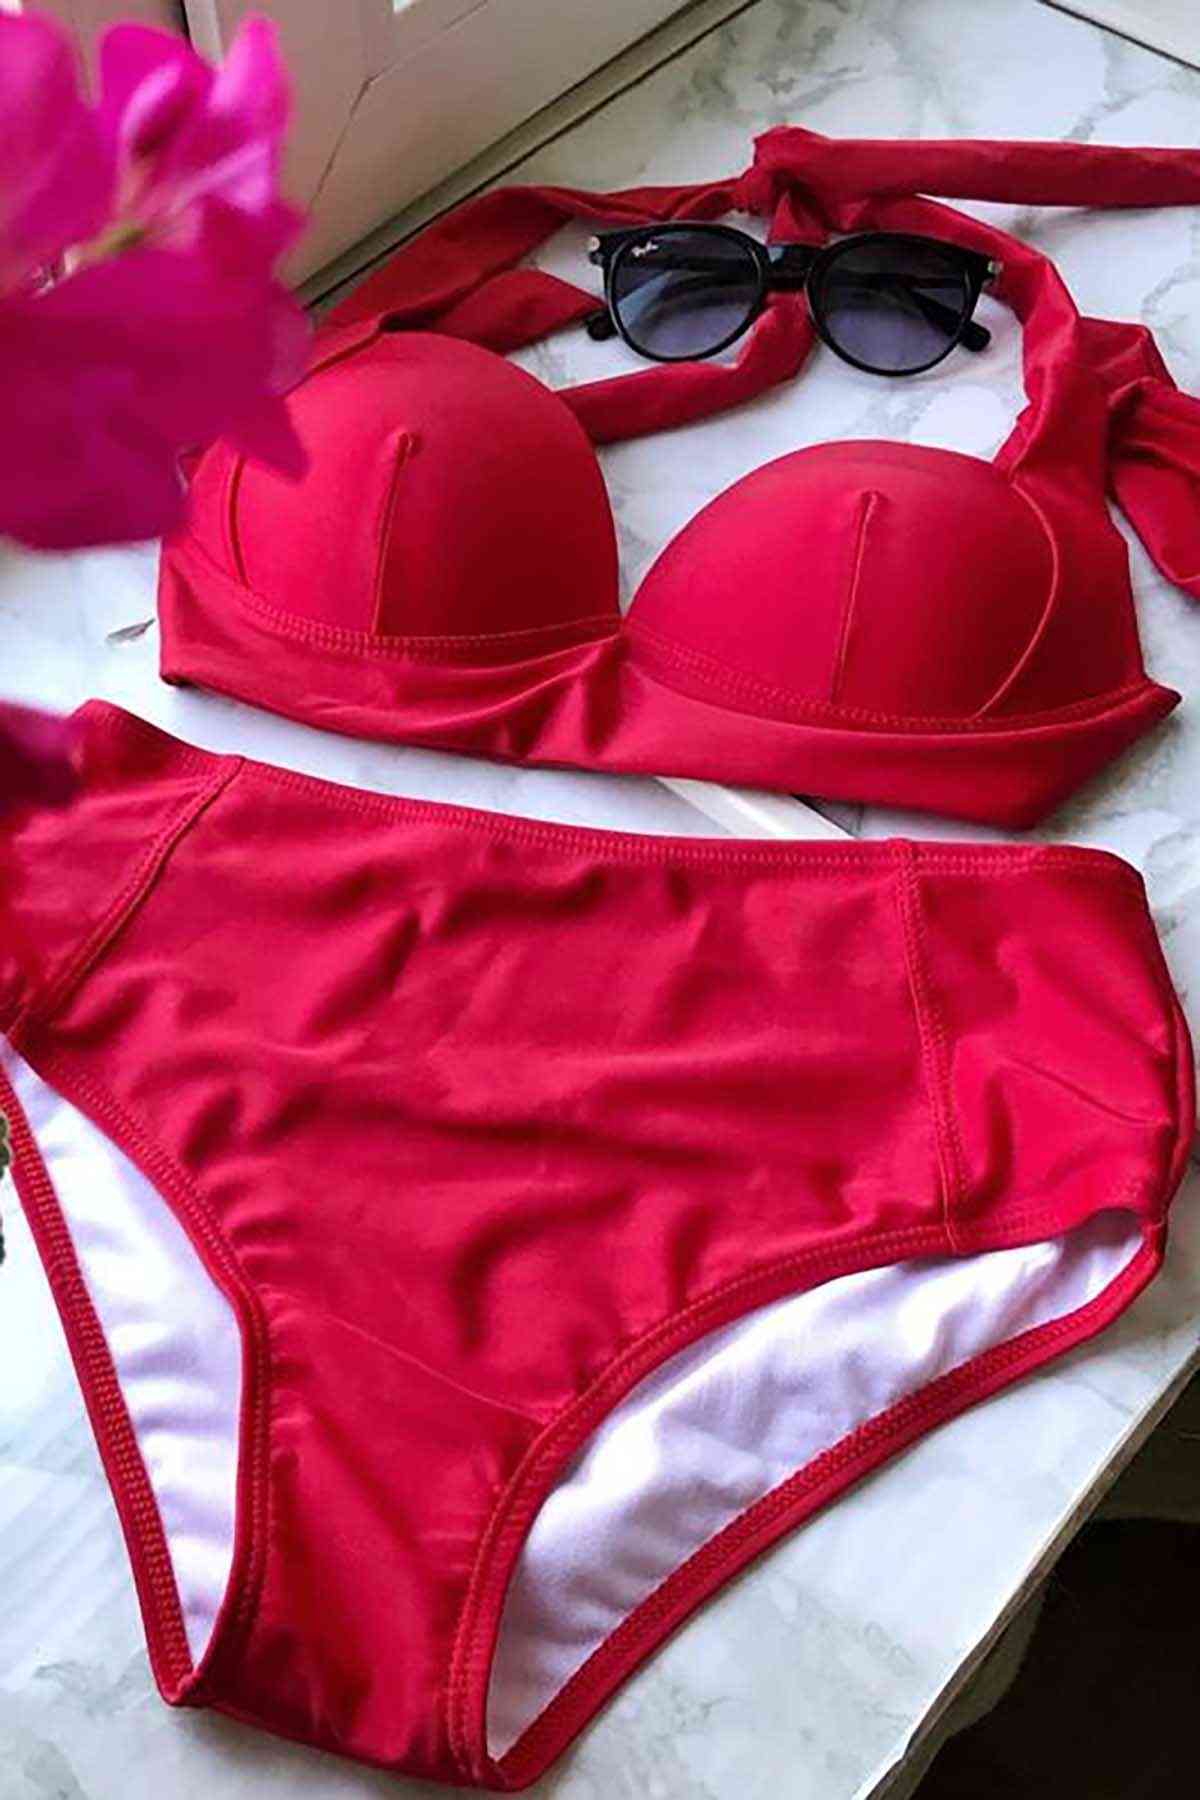 Red High Waist Bikini Set Women Swimwear Swimsuit